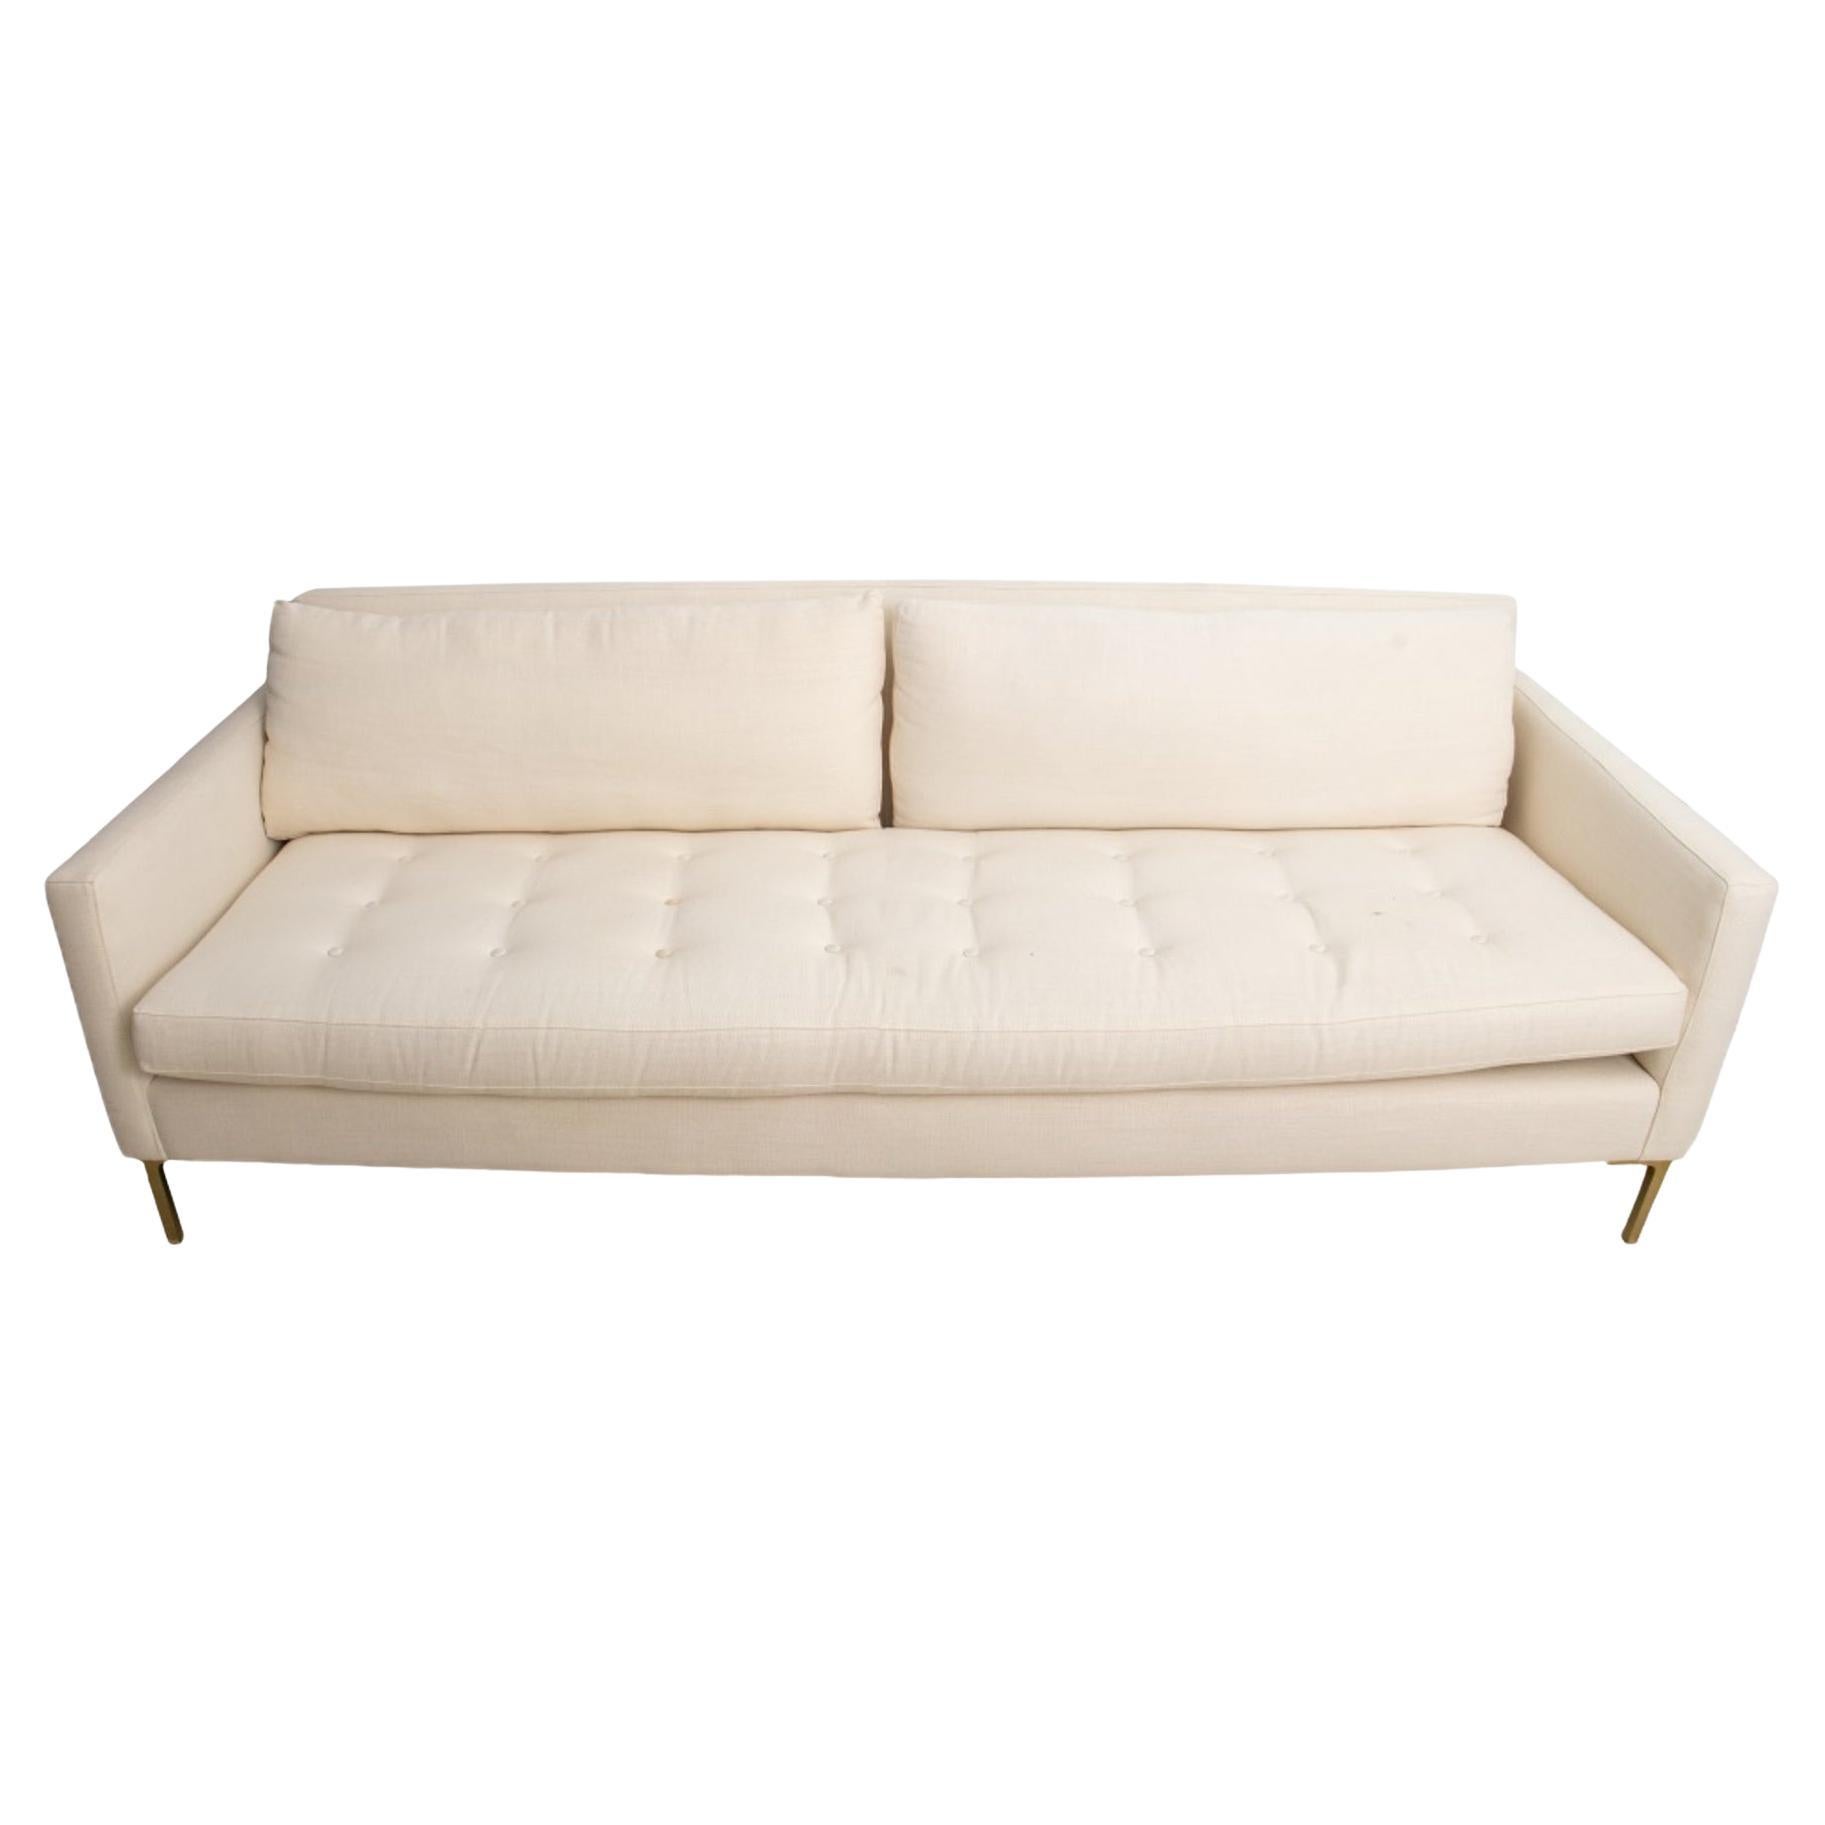 Knoll Mid-Century Modern Style Sofa